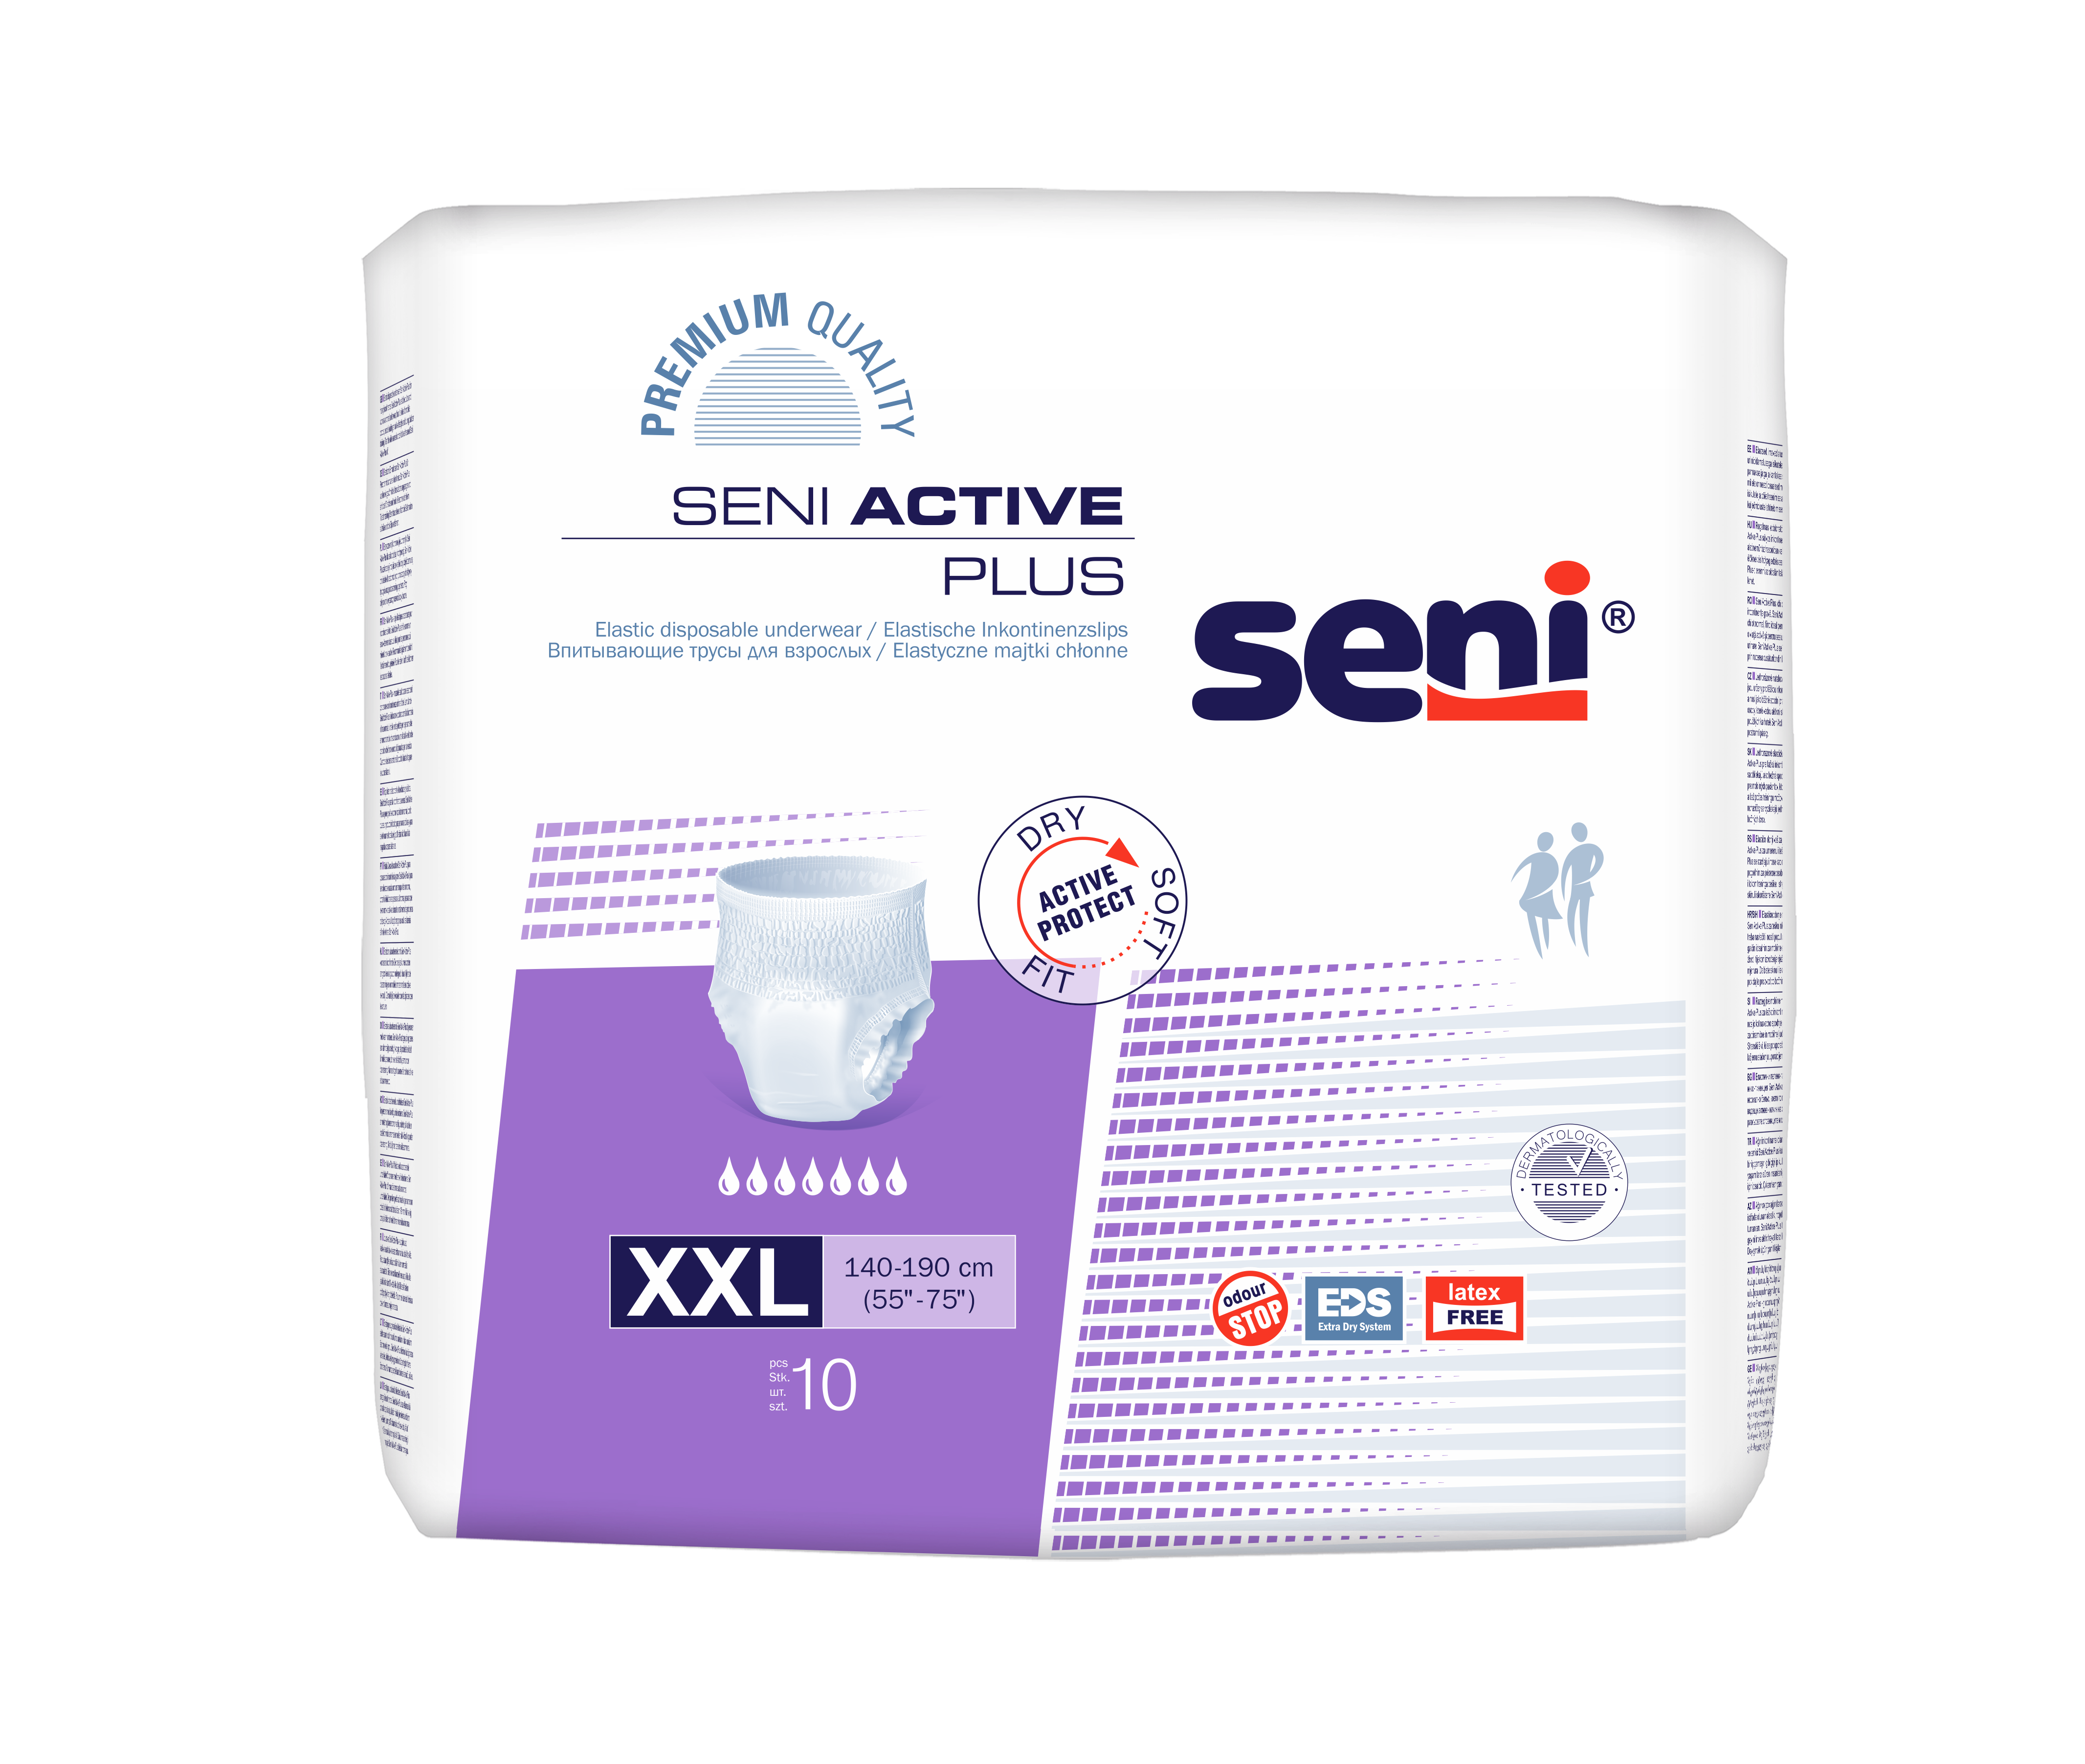 Seni Active Plus elastische Inkontinenzpants 10 Stück